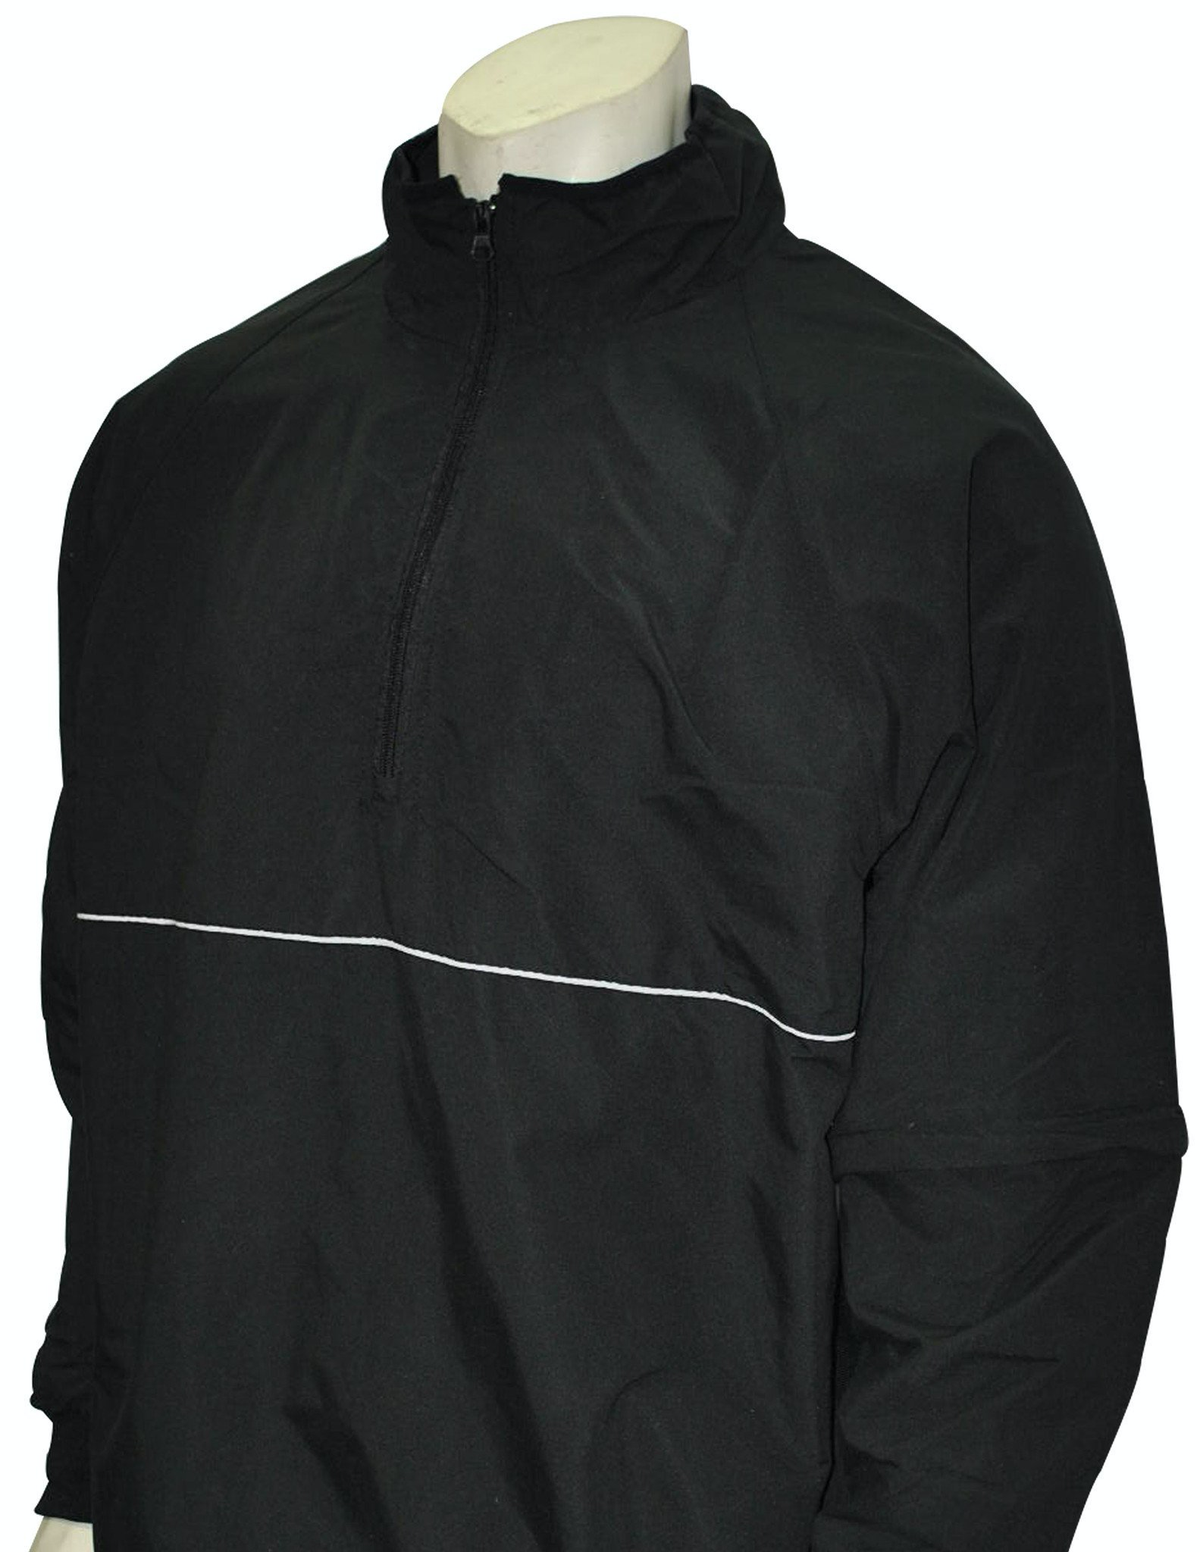 Smitty | BBS-323 | Convertible Half-Sleeve Baseball Umpire Jacket